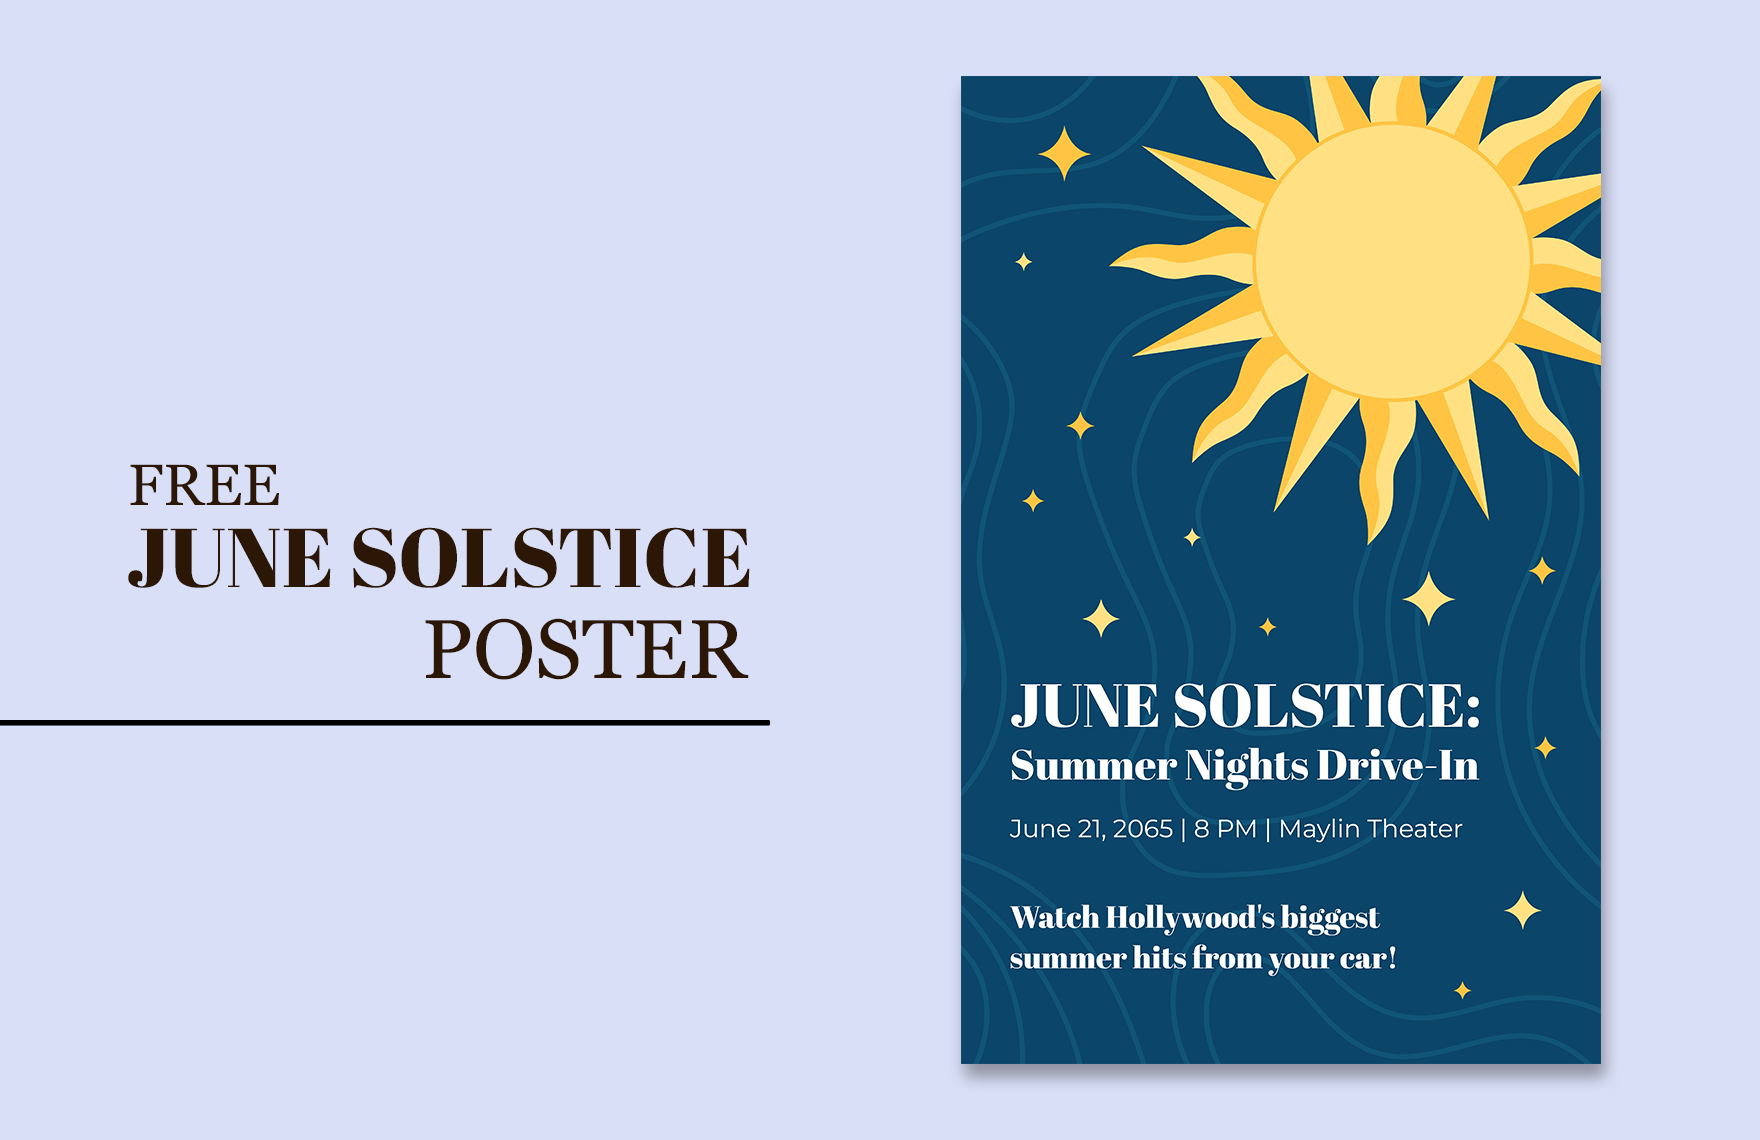 June Solstice Poster